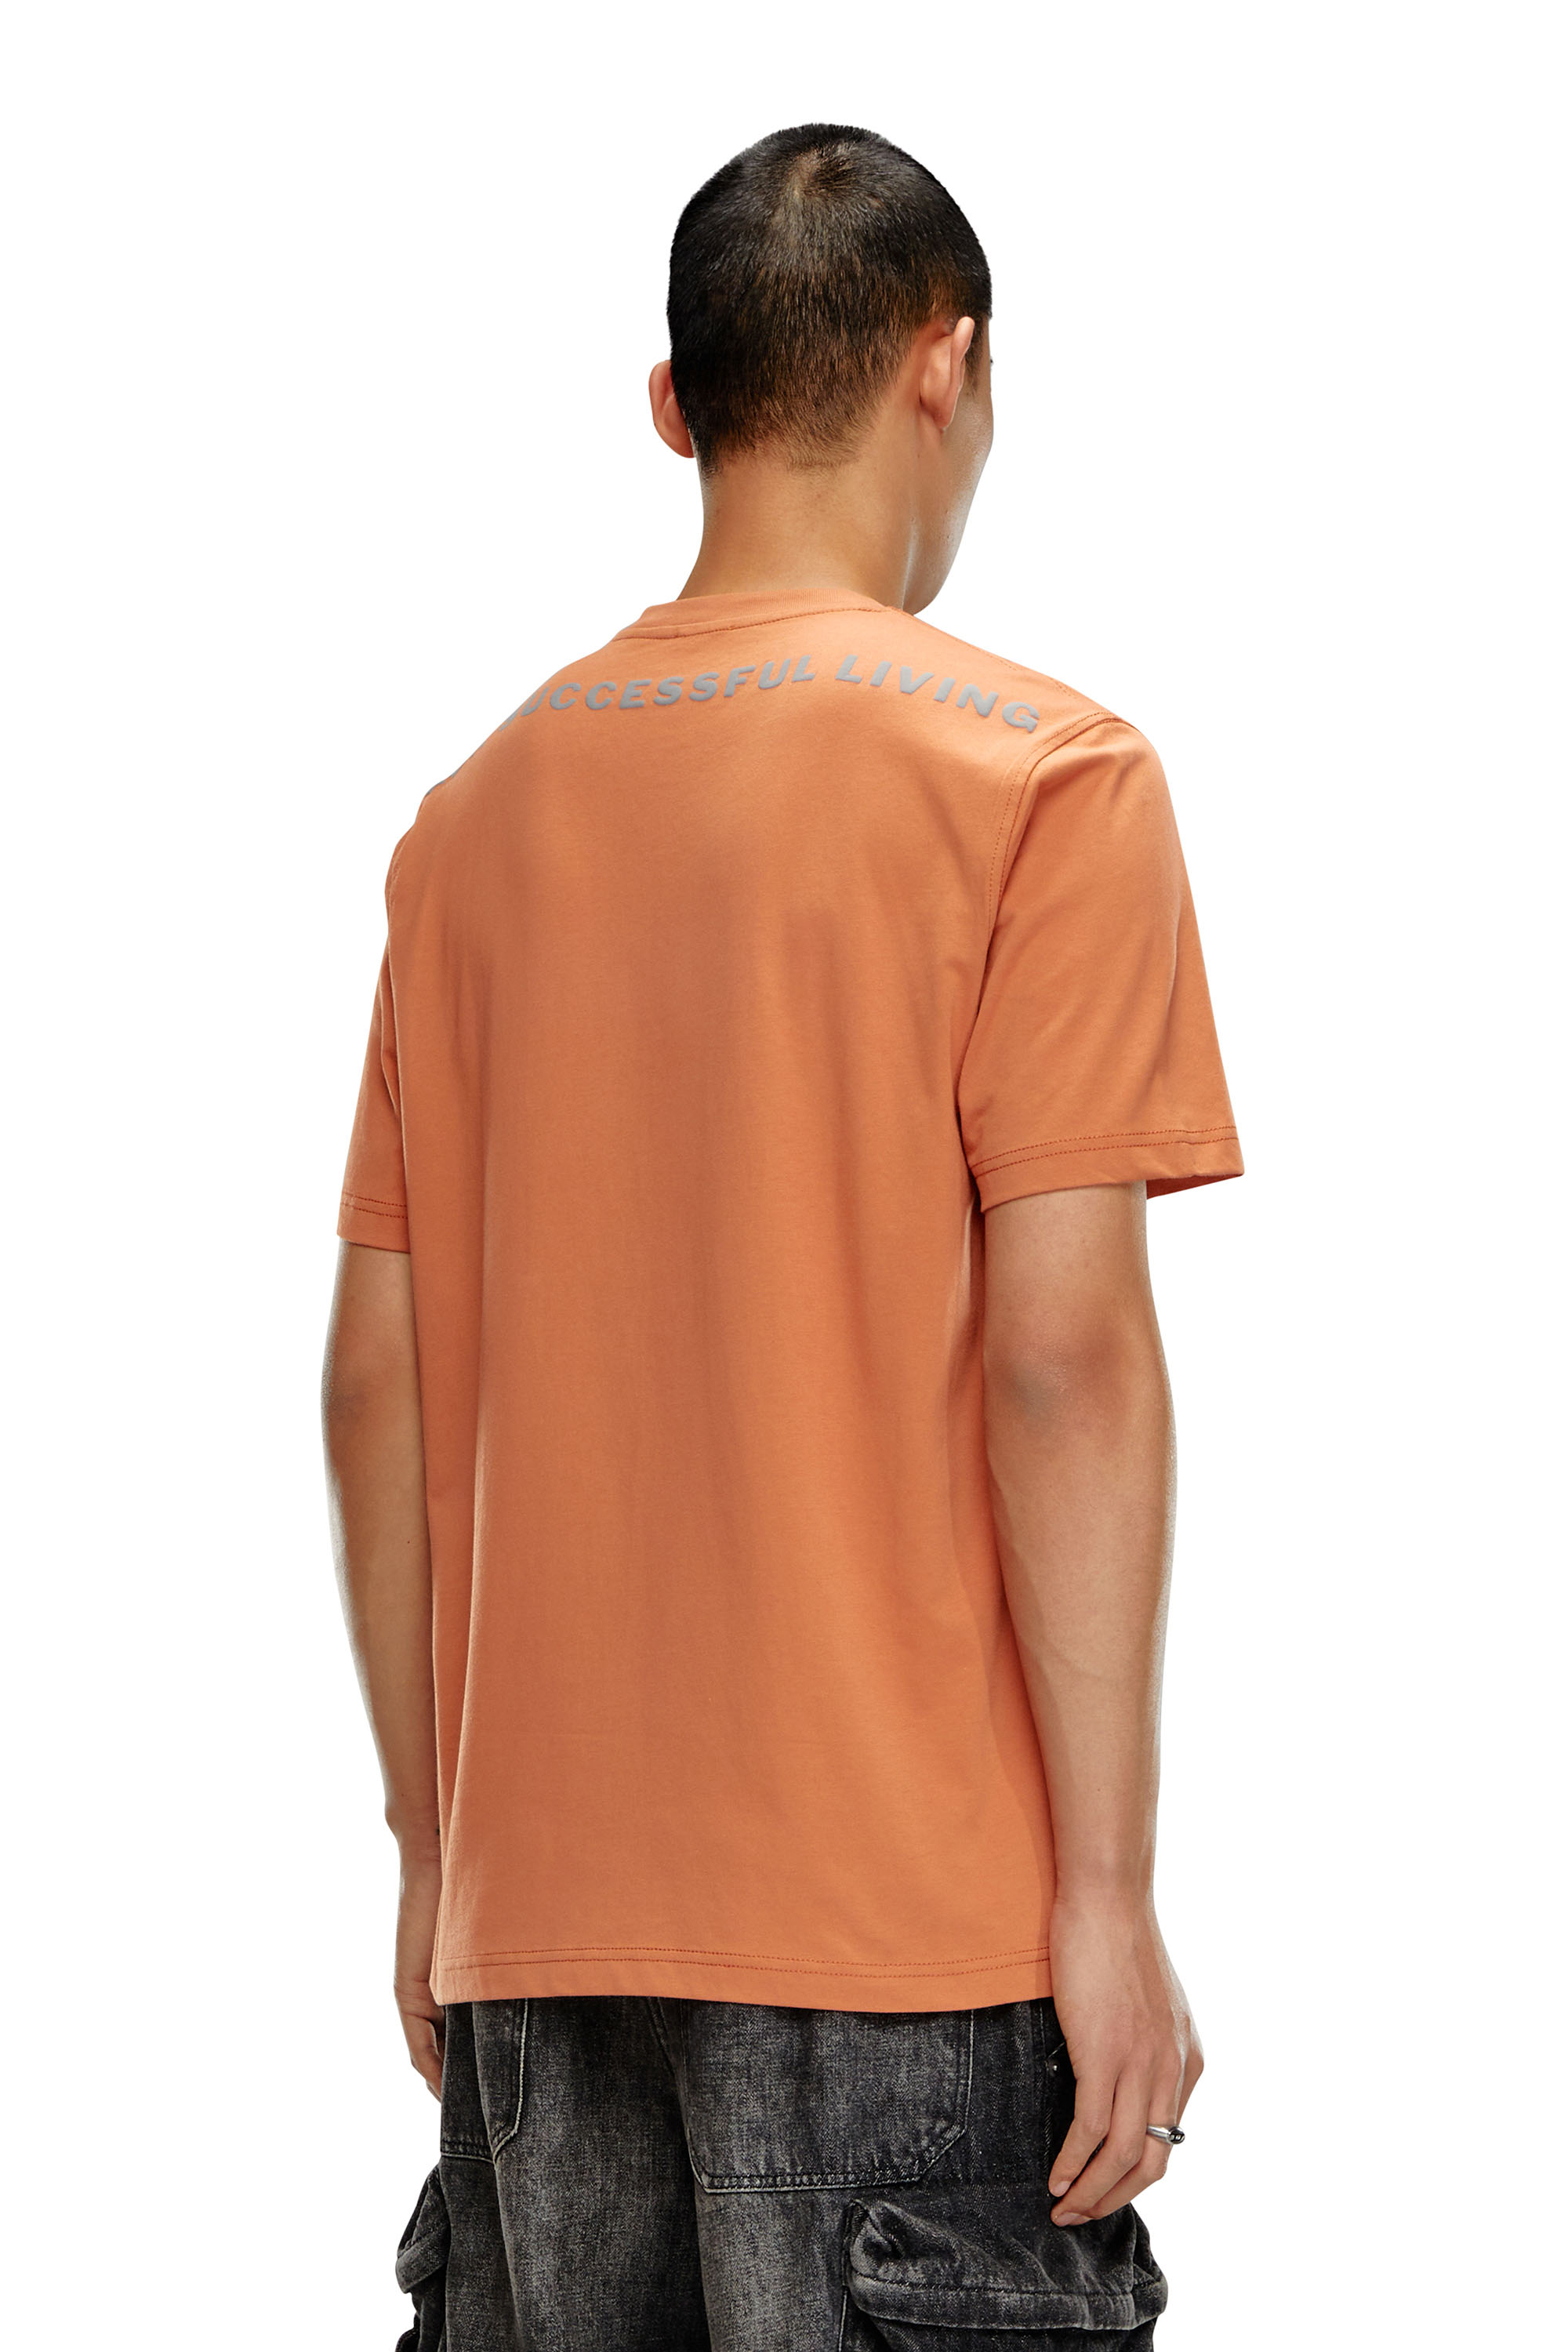 Diesel - T-JUST-N16, Homme T-shirt avec motif camouflage zébré in Orange - Image 3